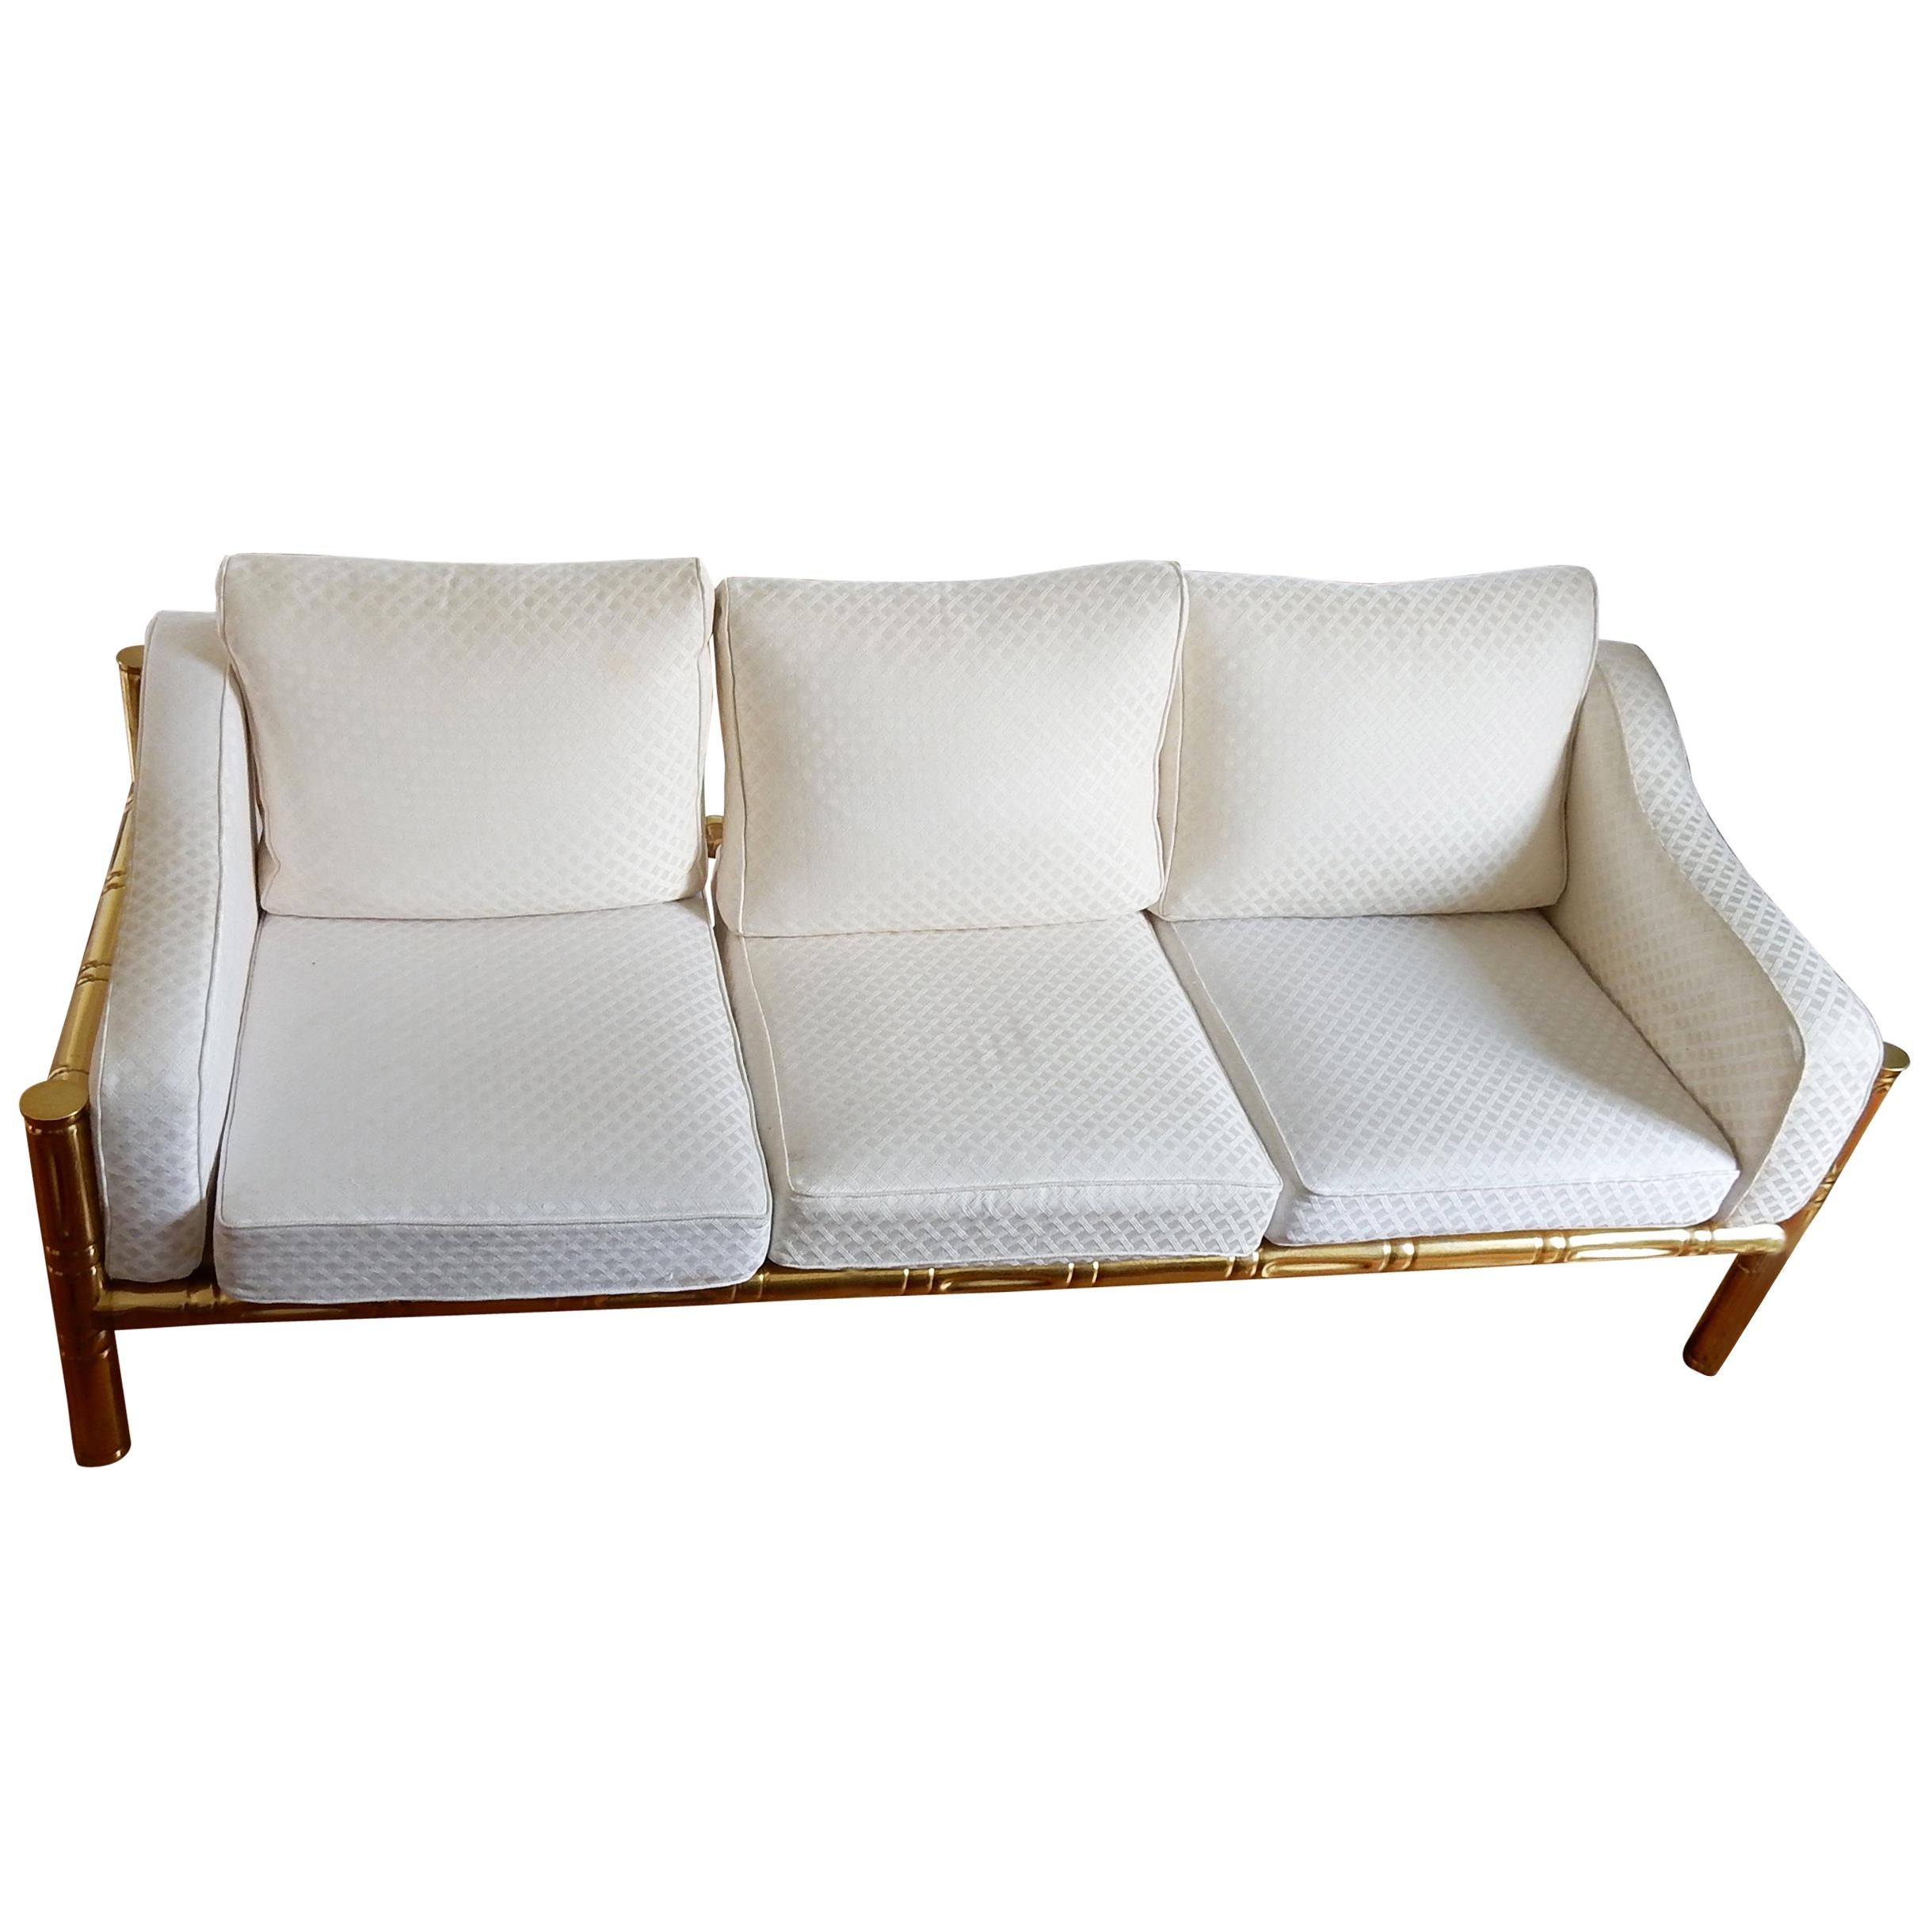 1970 Sofa Three-Seat in the Style of Maison Jansen Brass Model Bamboo